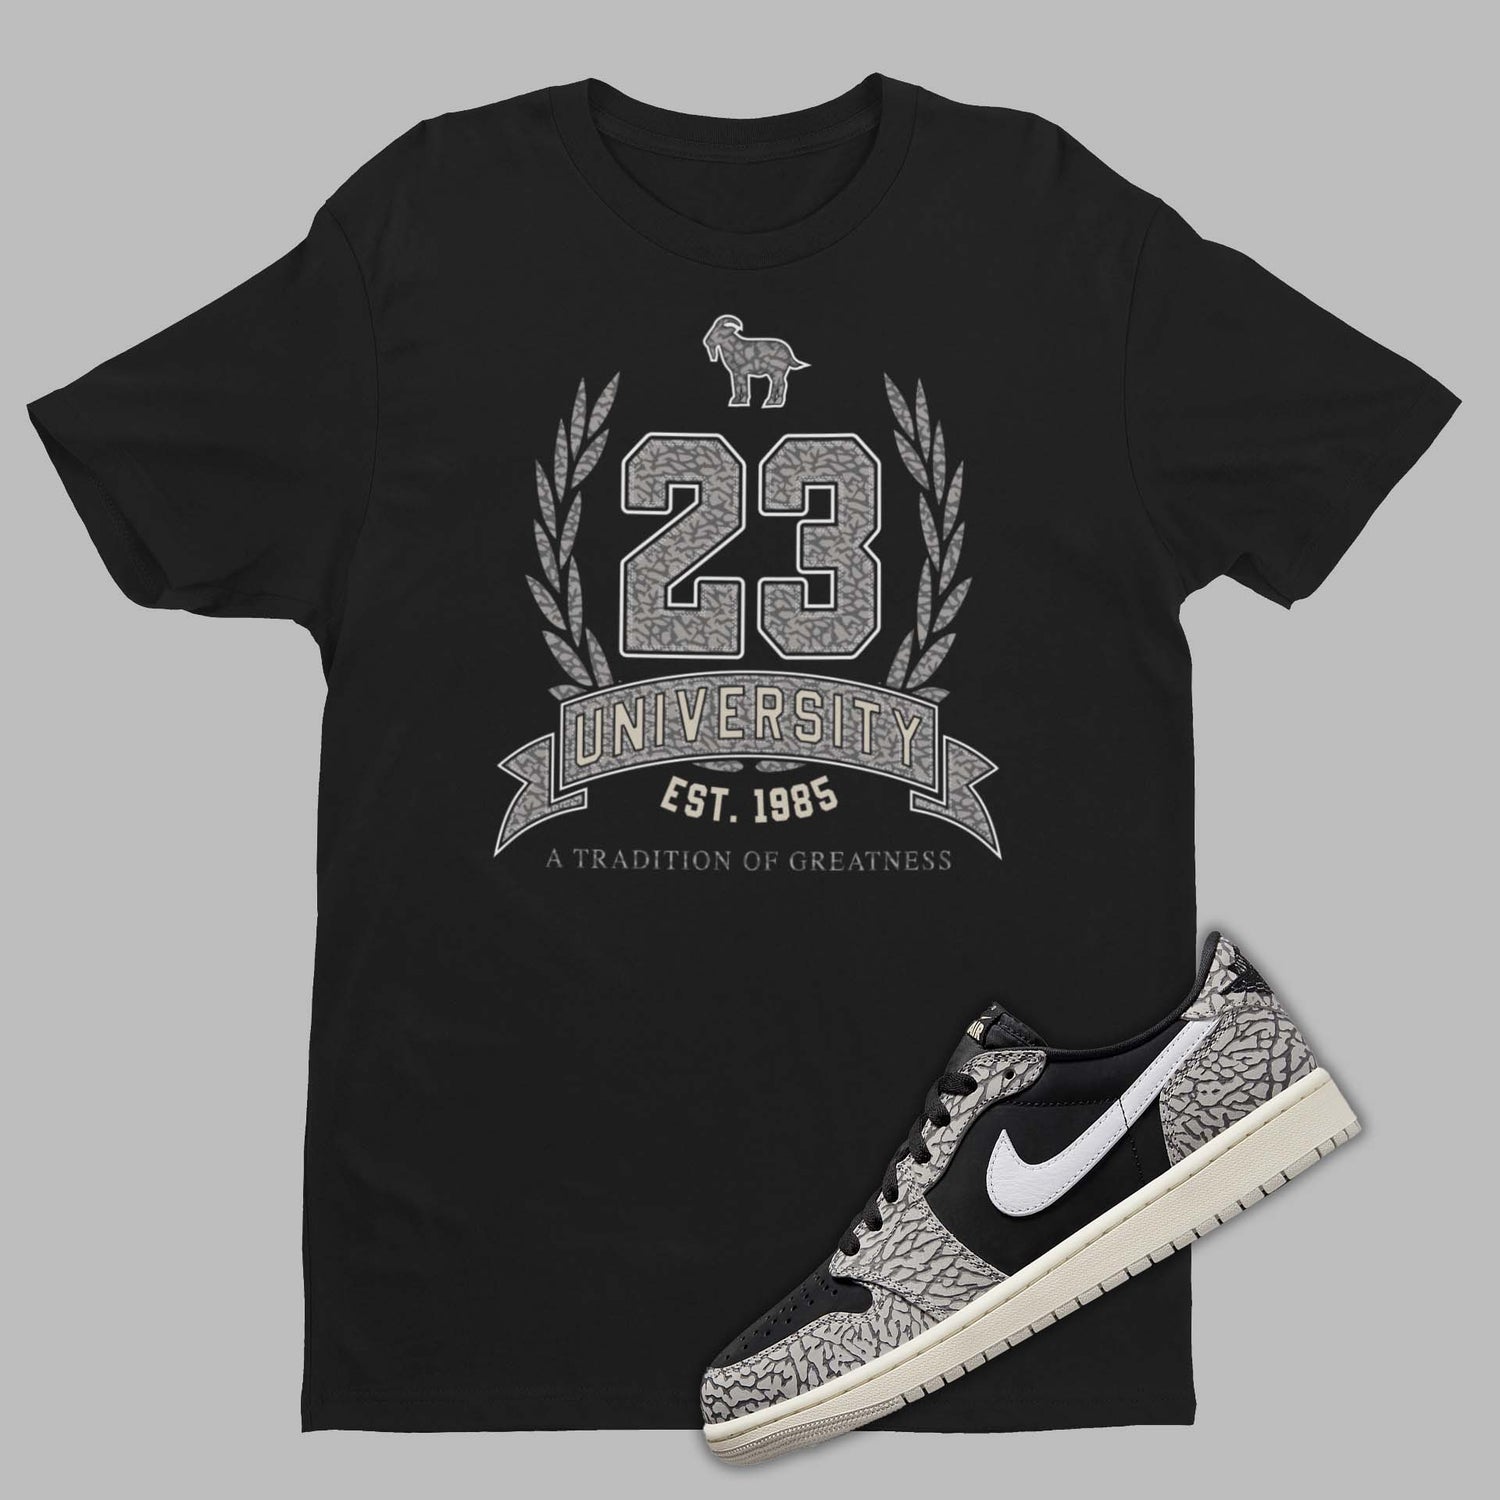 23 University Shirt Matching Air Jordan 1 Low Black Cement